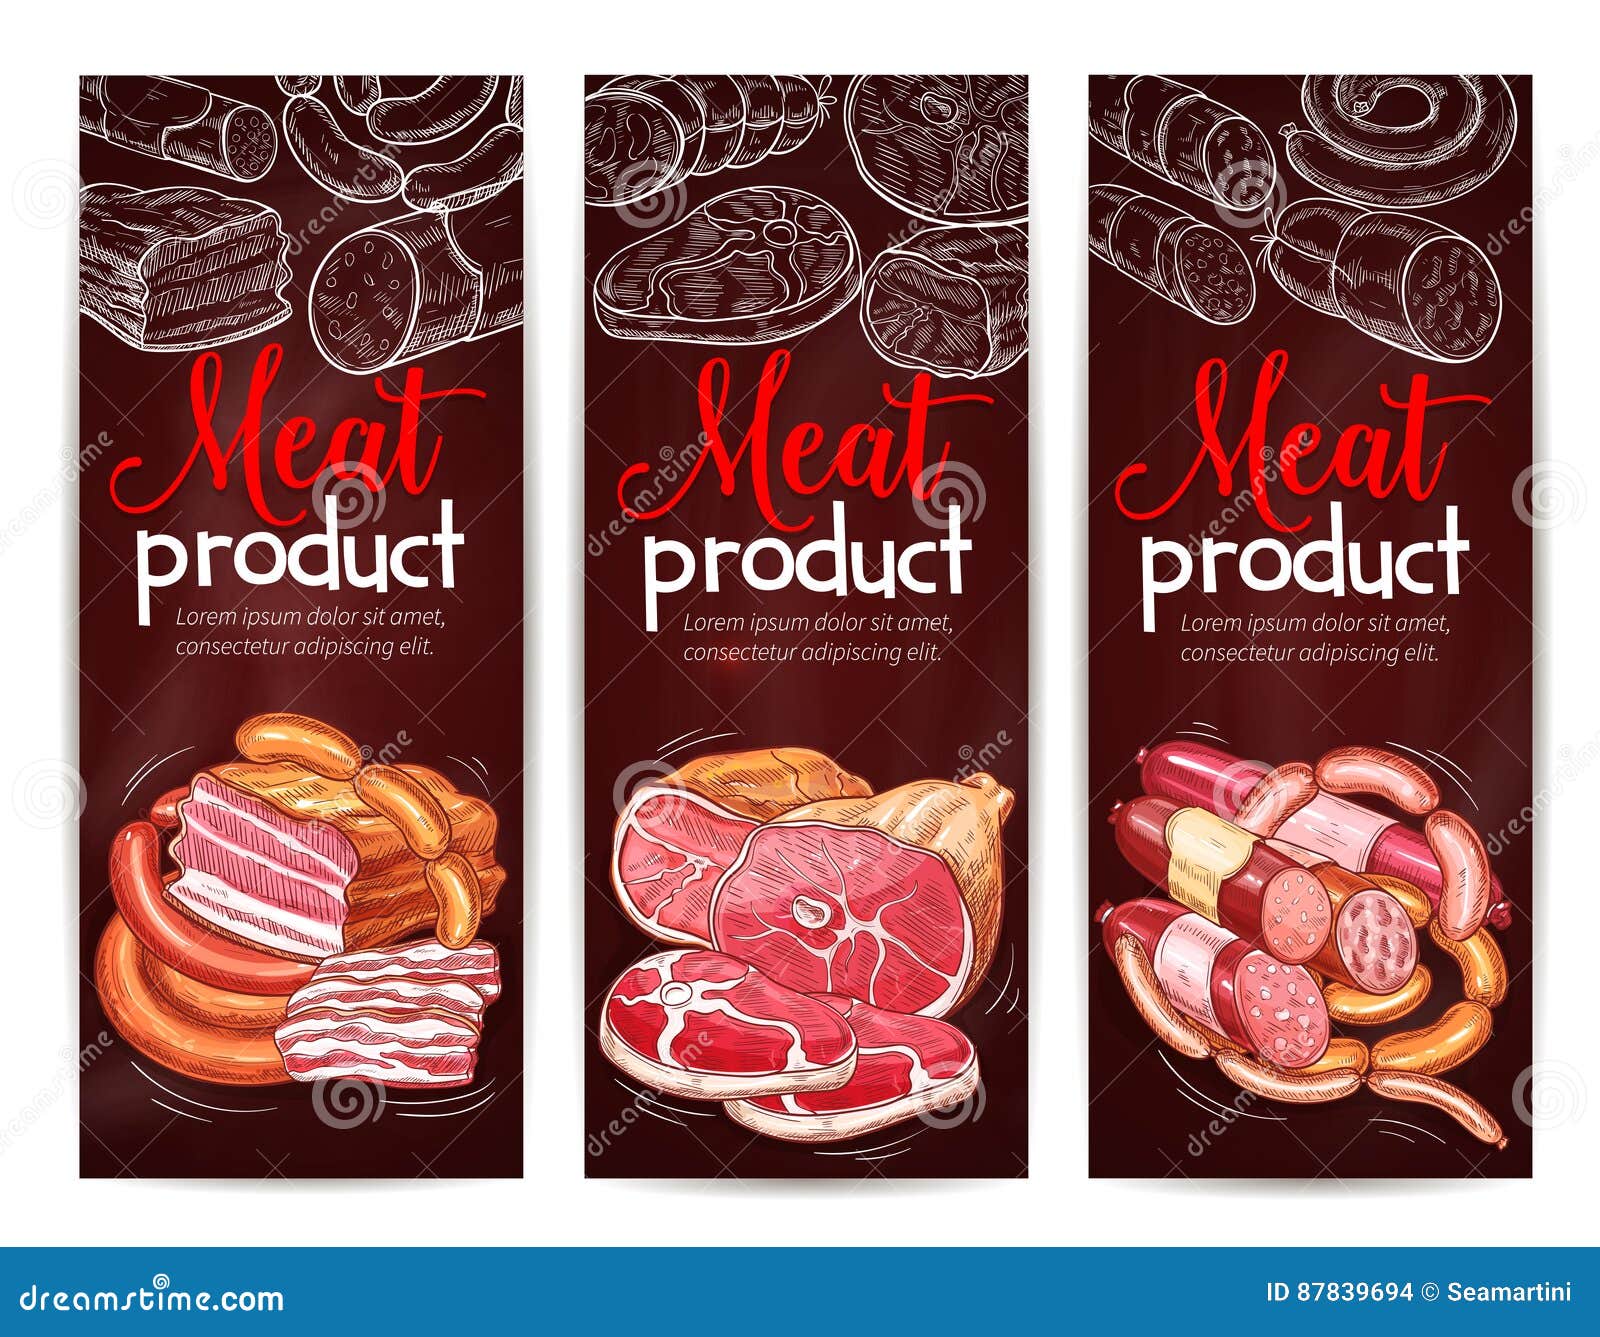  Meat Sausage Ham Bacon Chalkboard Banner Design Stock 